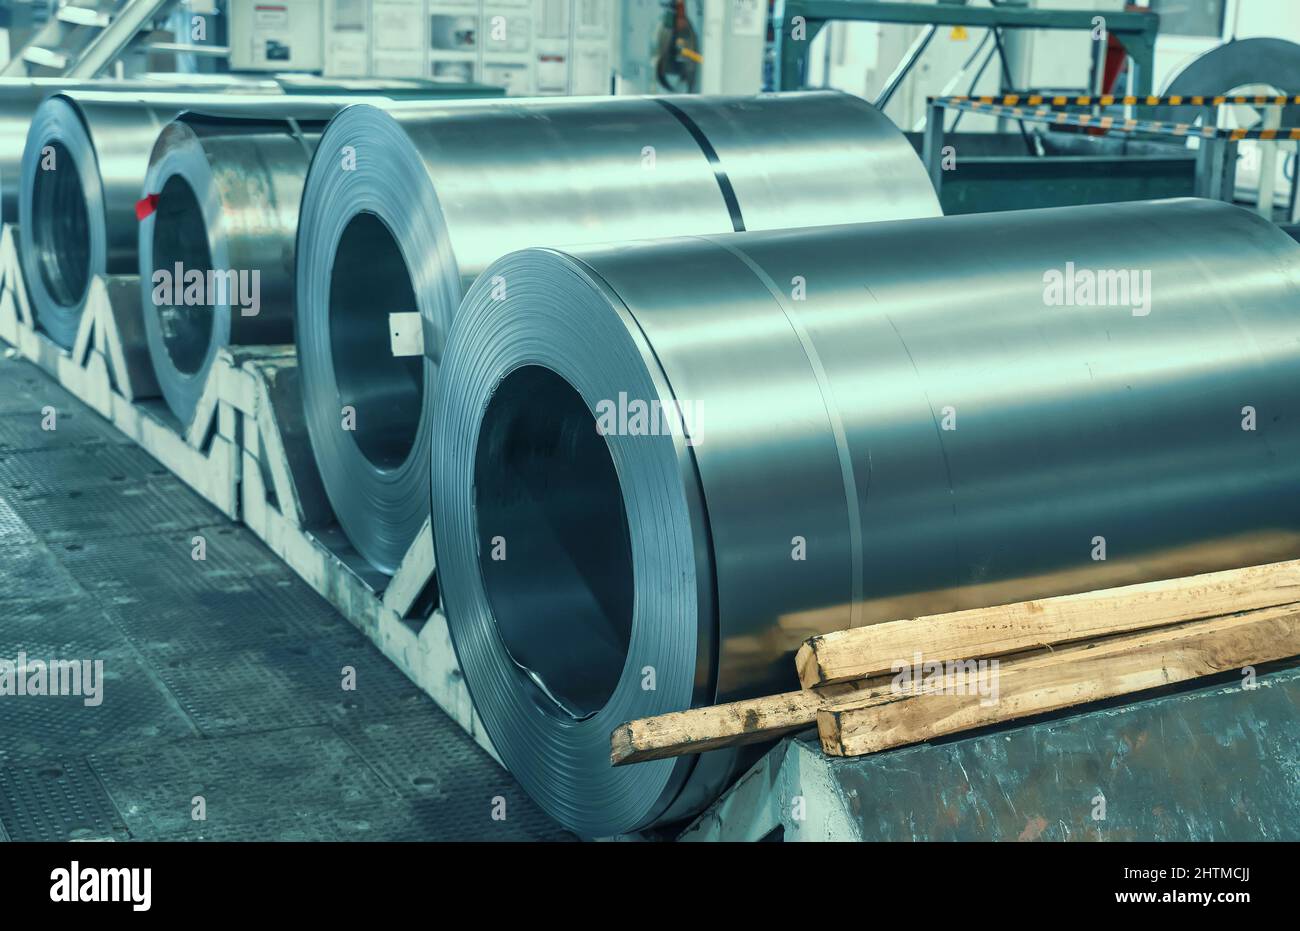 Rolls of sheet steel in factory. Galvanized steel coils for metalwork. Stock Photo